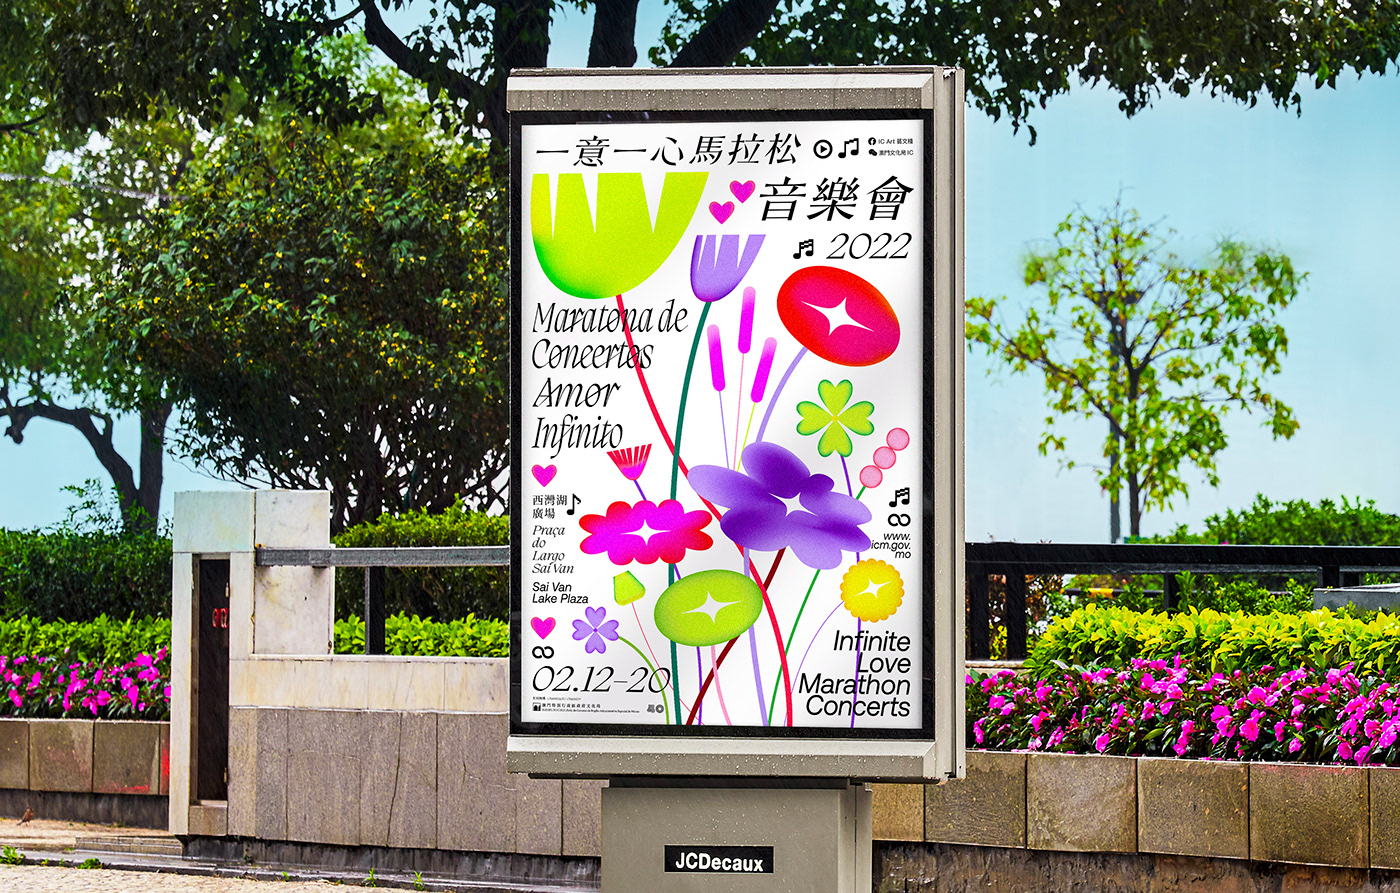 asia AU CHON HIN China Design design festival graphic macao design music untitled macao visual identity